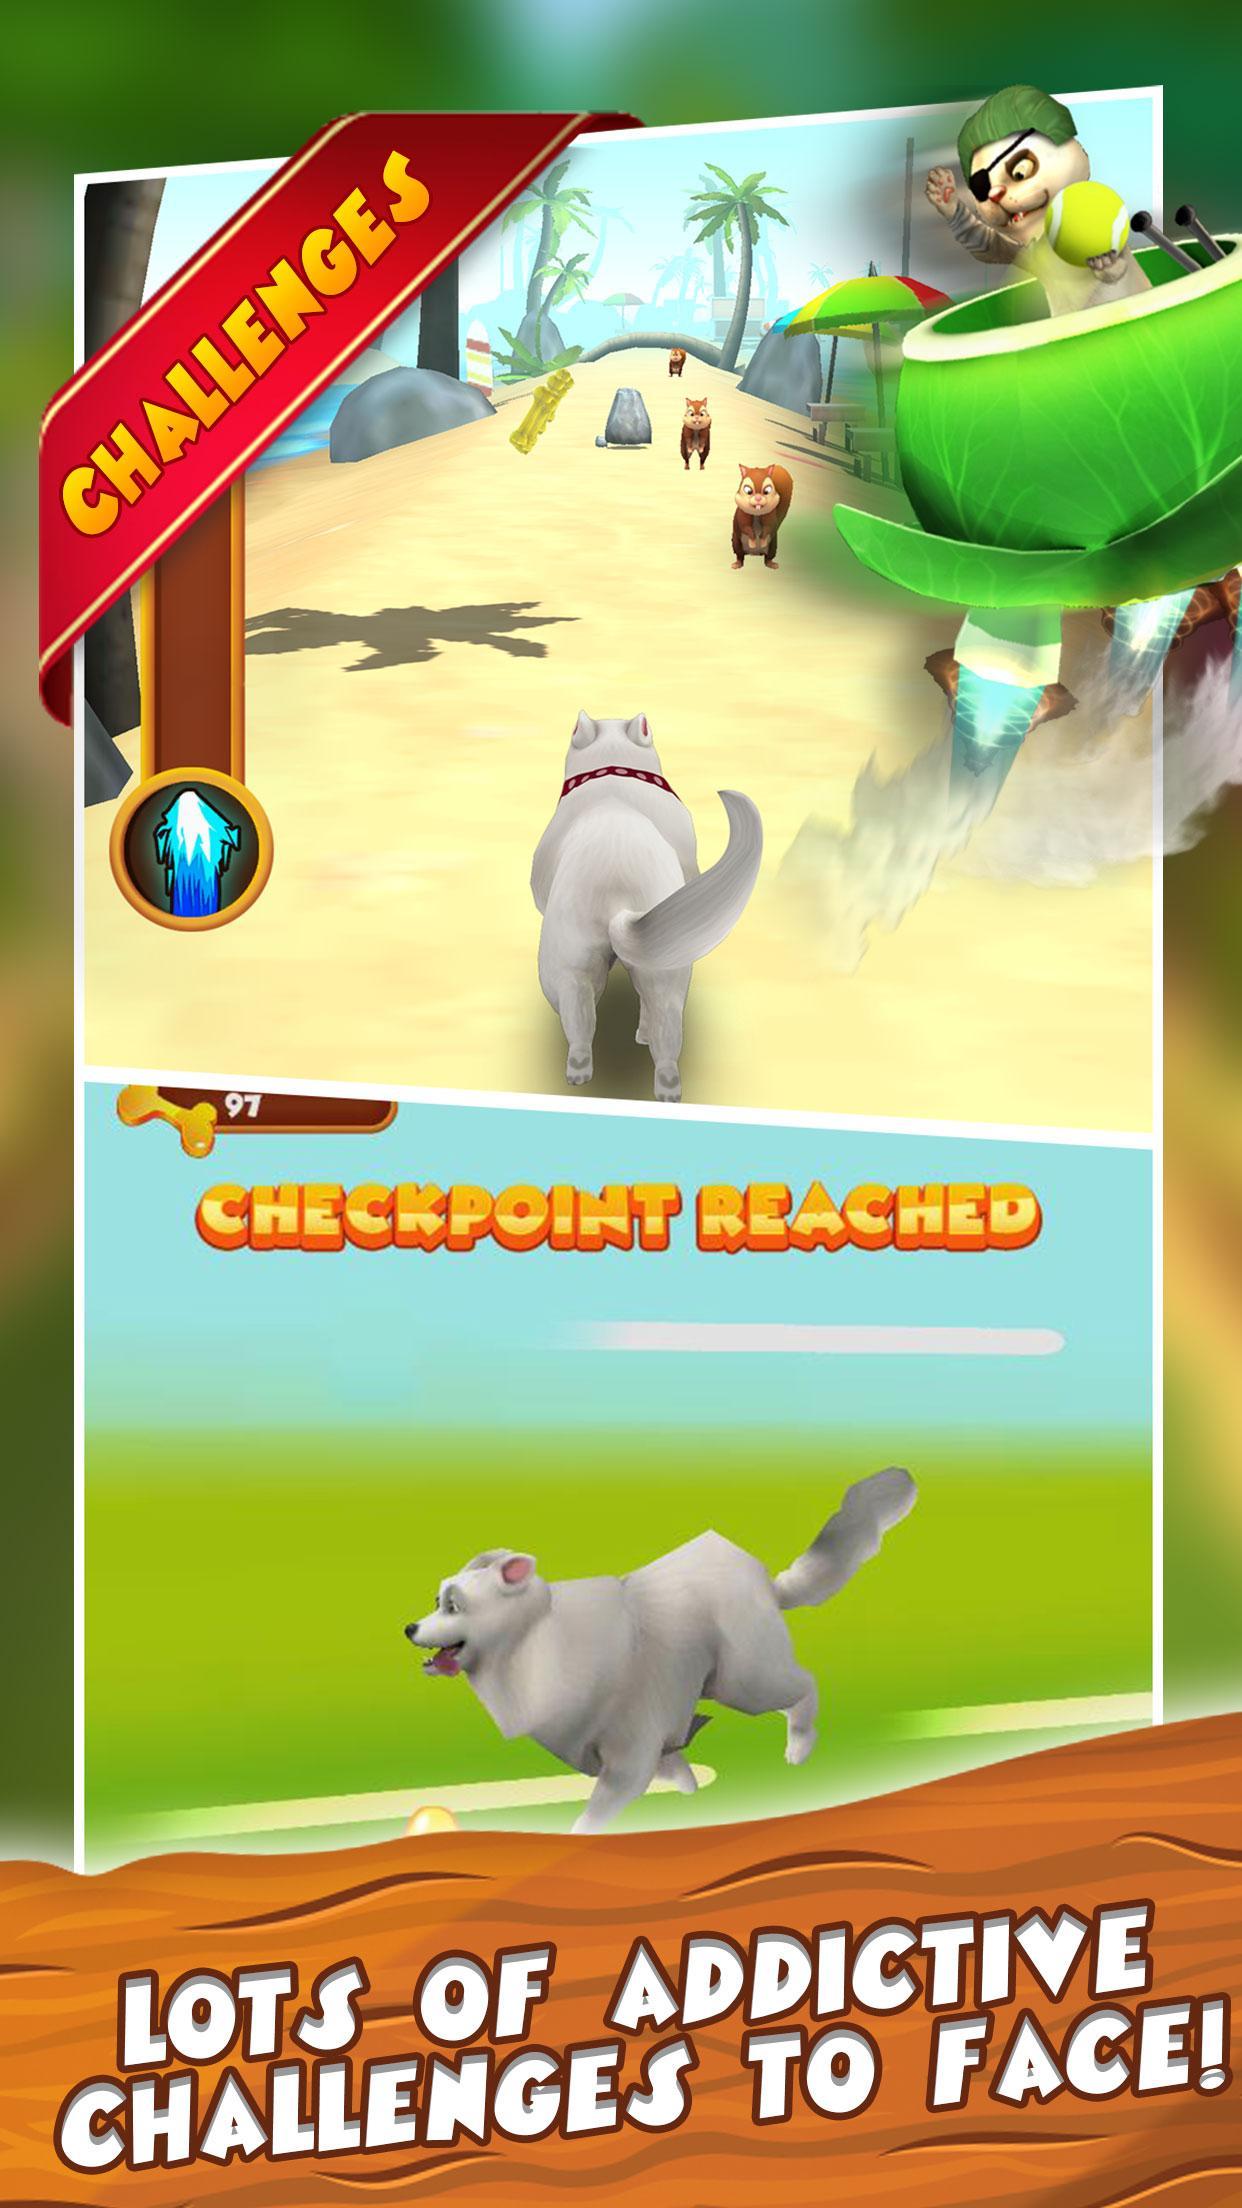 Screenshot of Doggo